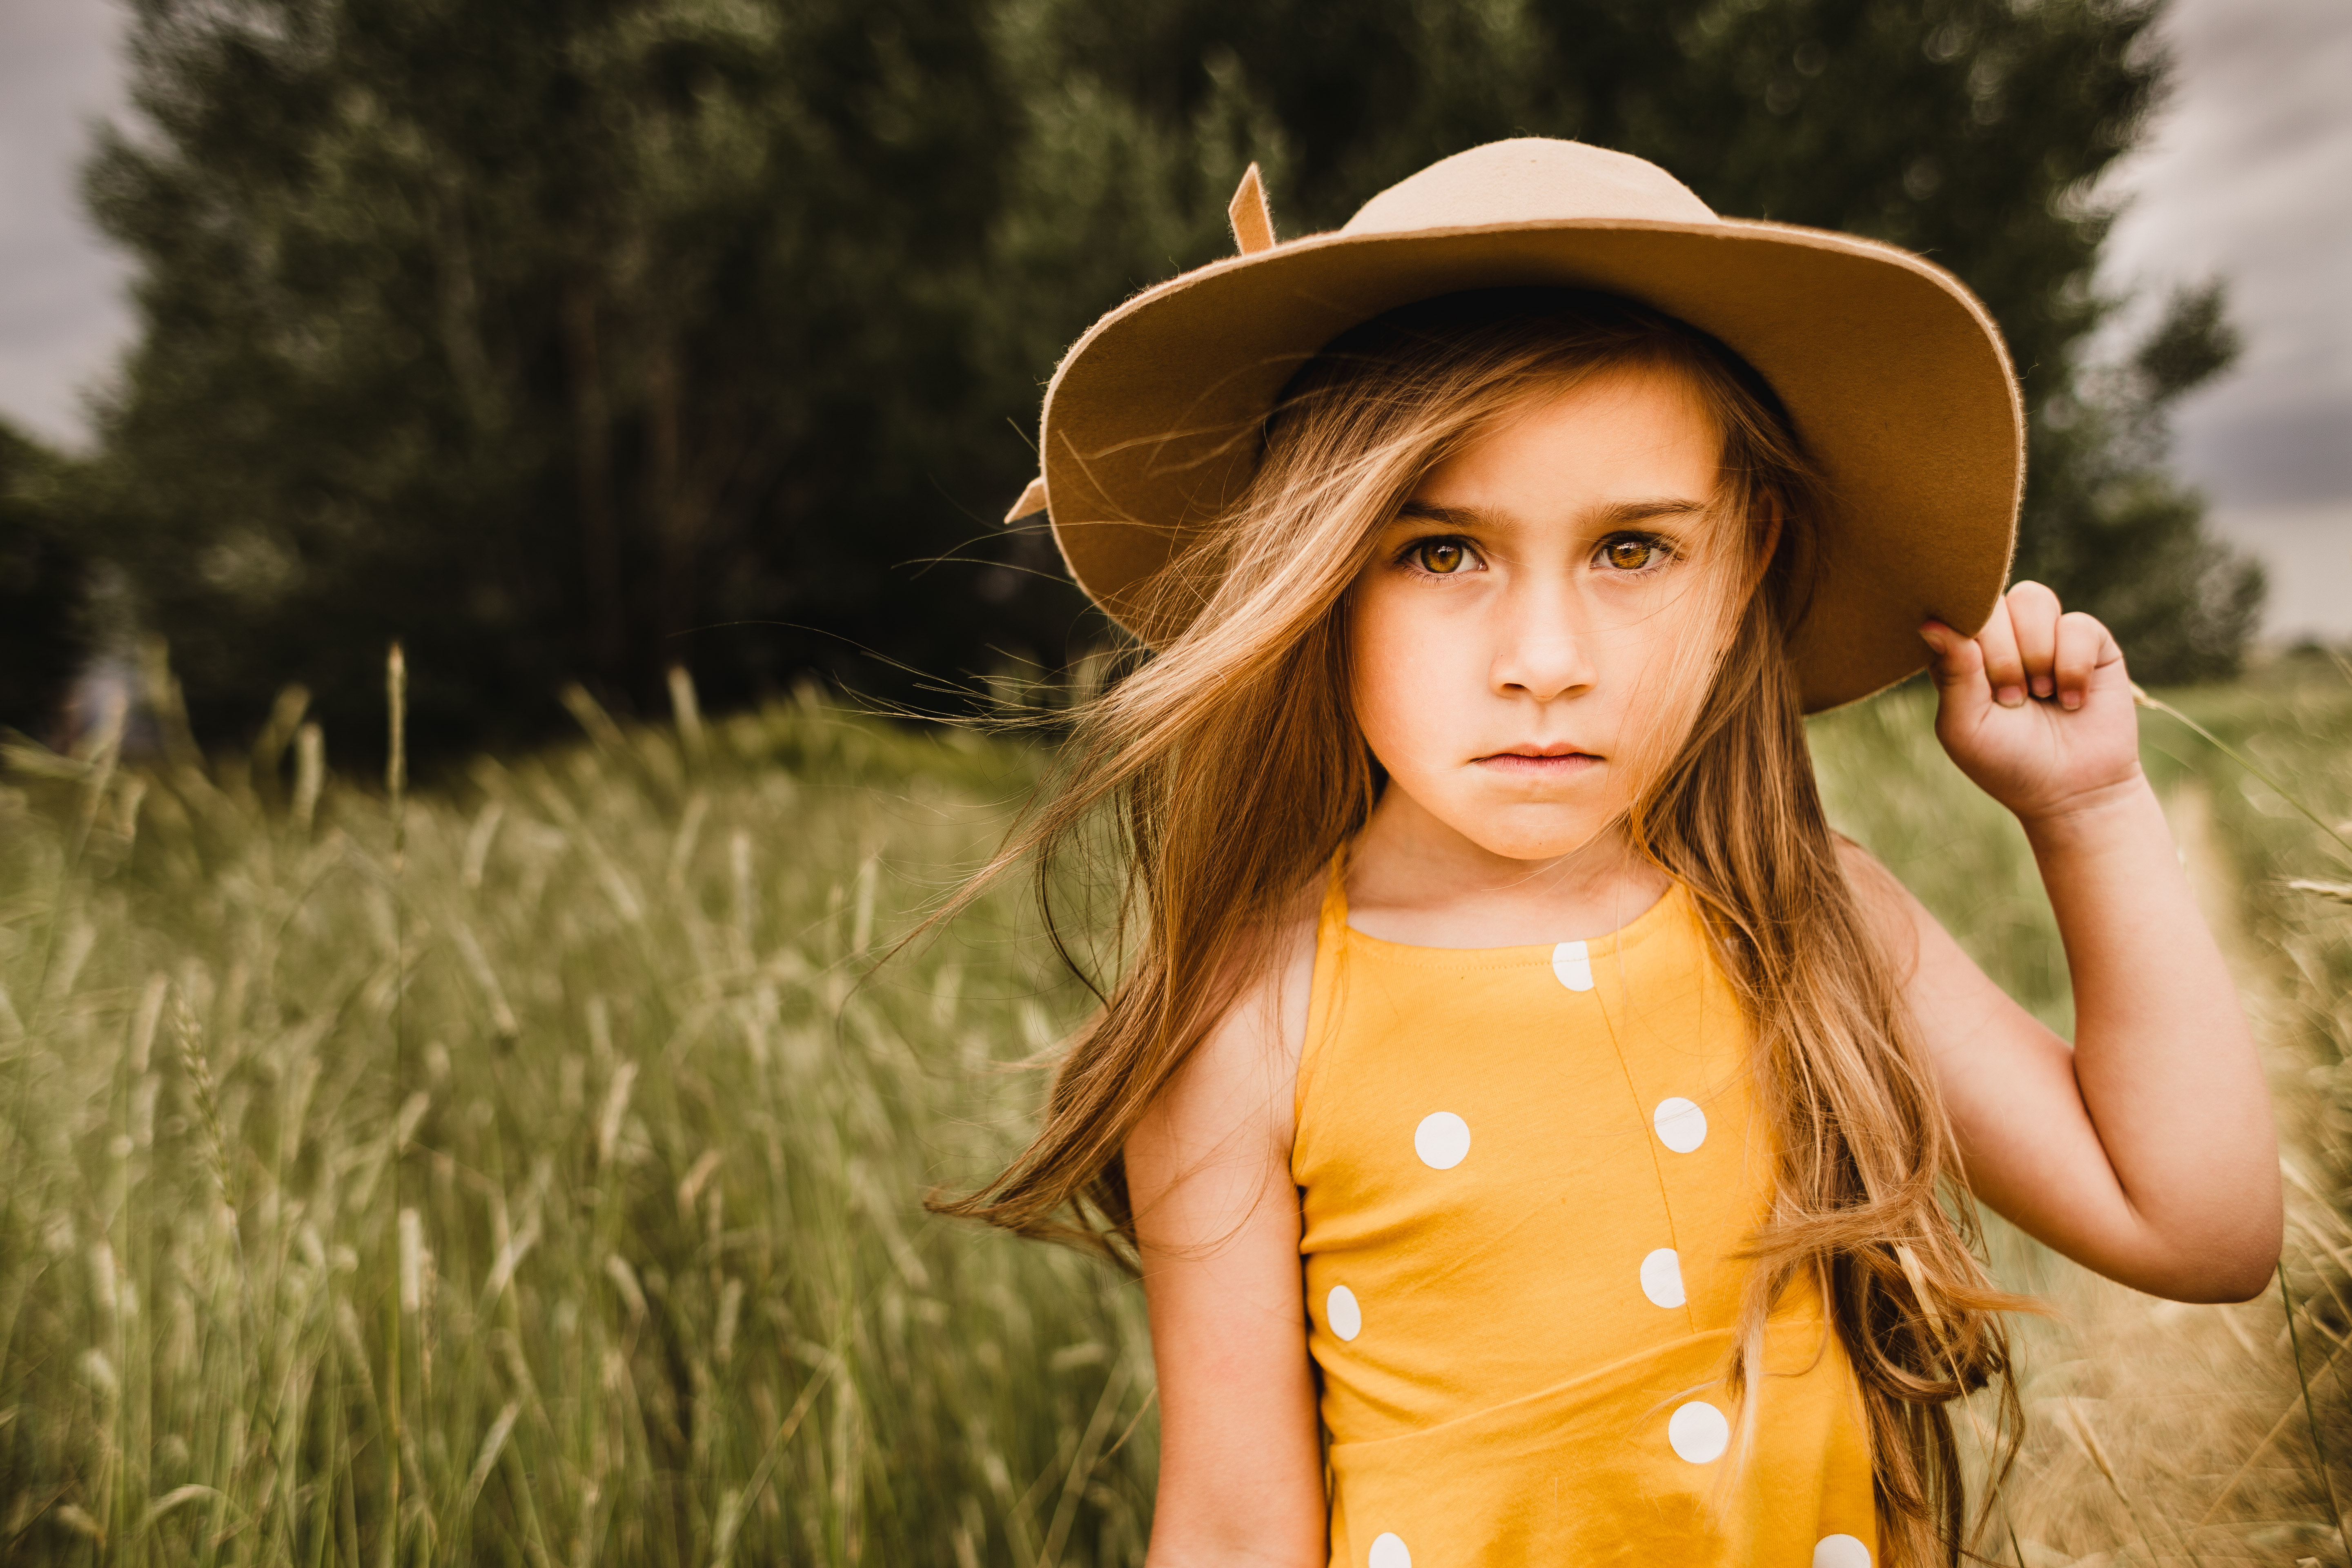 Colorado Child Model- Colorado Photographer